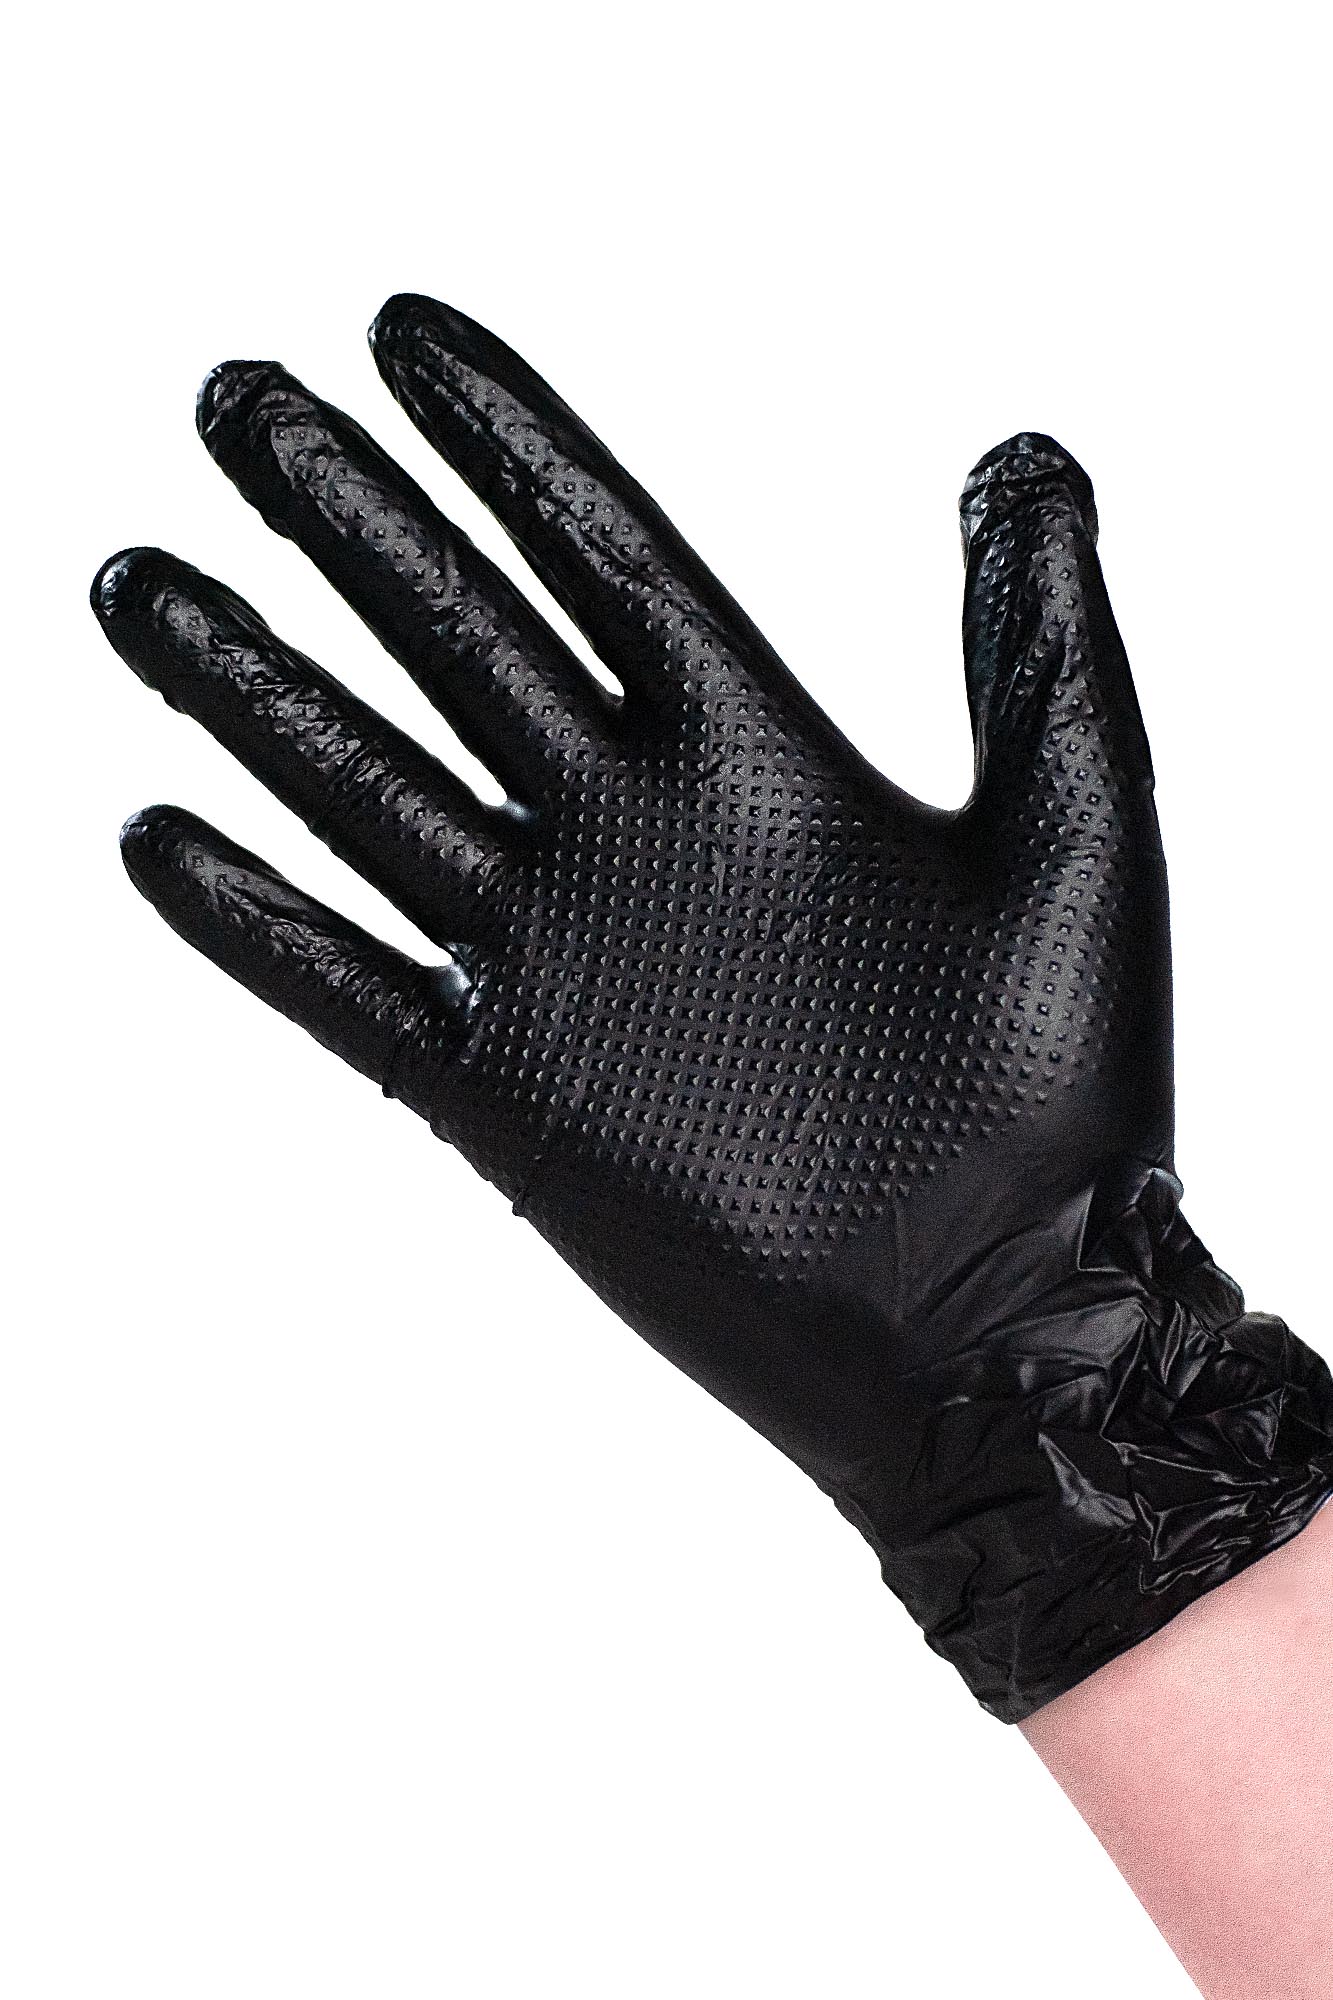 Pacific Breeze® Heavy Duty Black Nitrile Gloves 8MIL